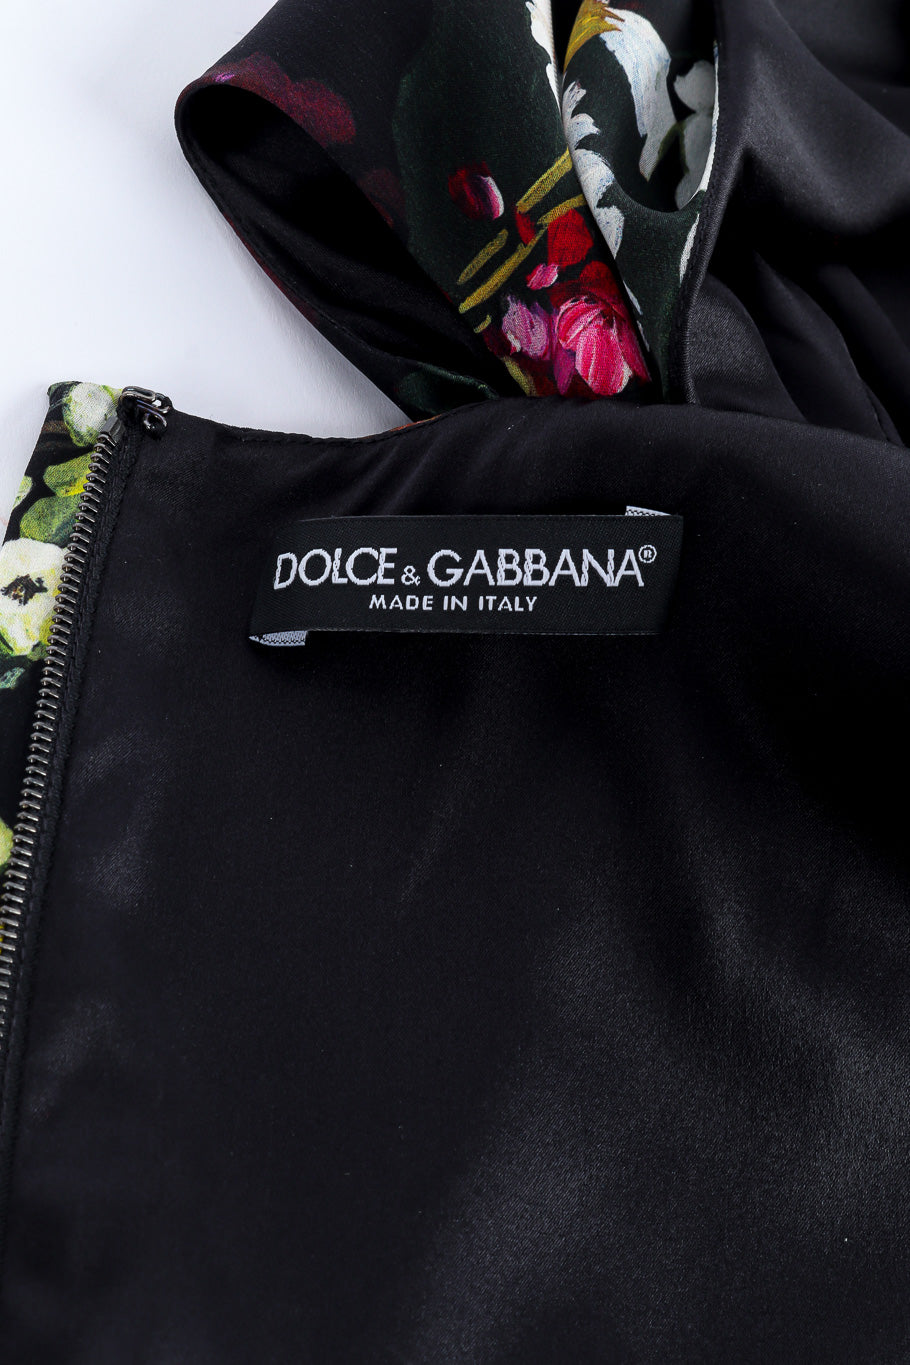 Dolce & Gabbana Floral Printed Sheath Dress label @recessla